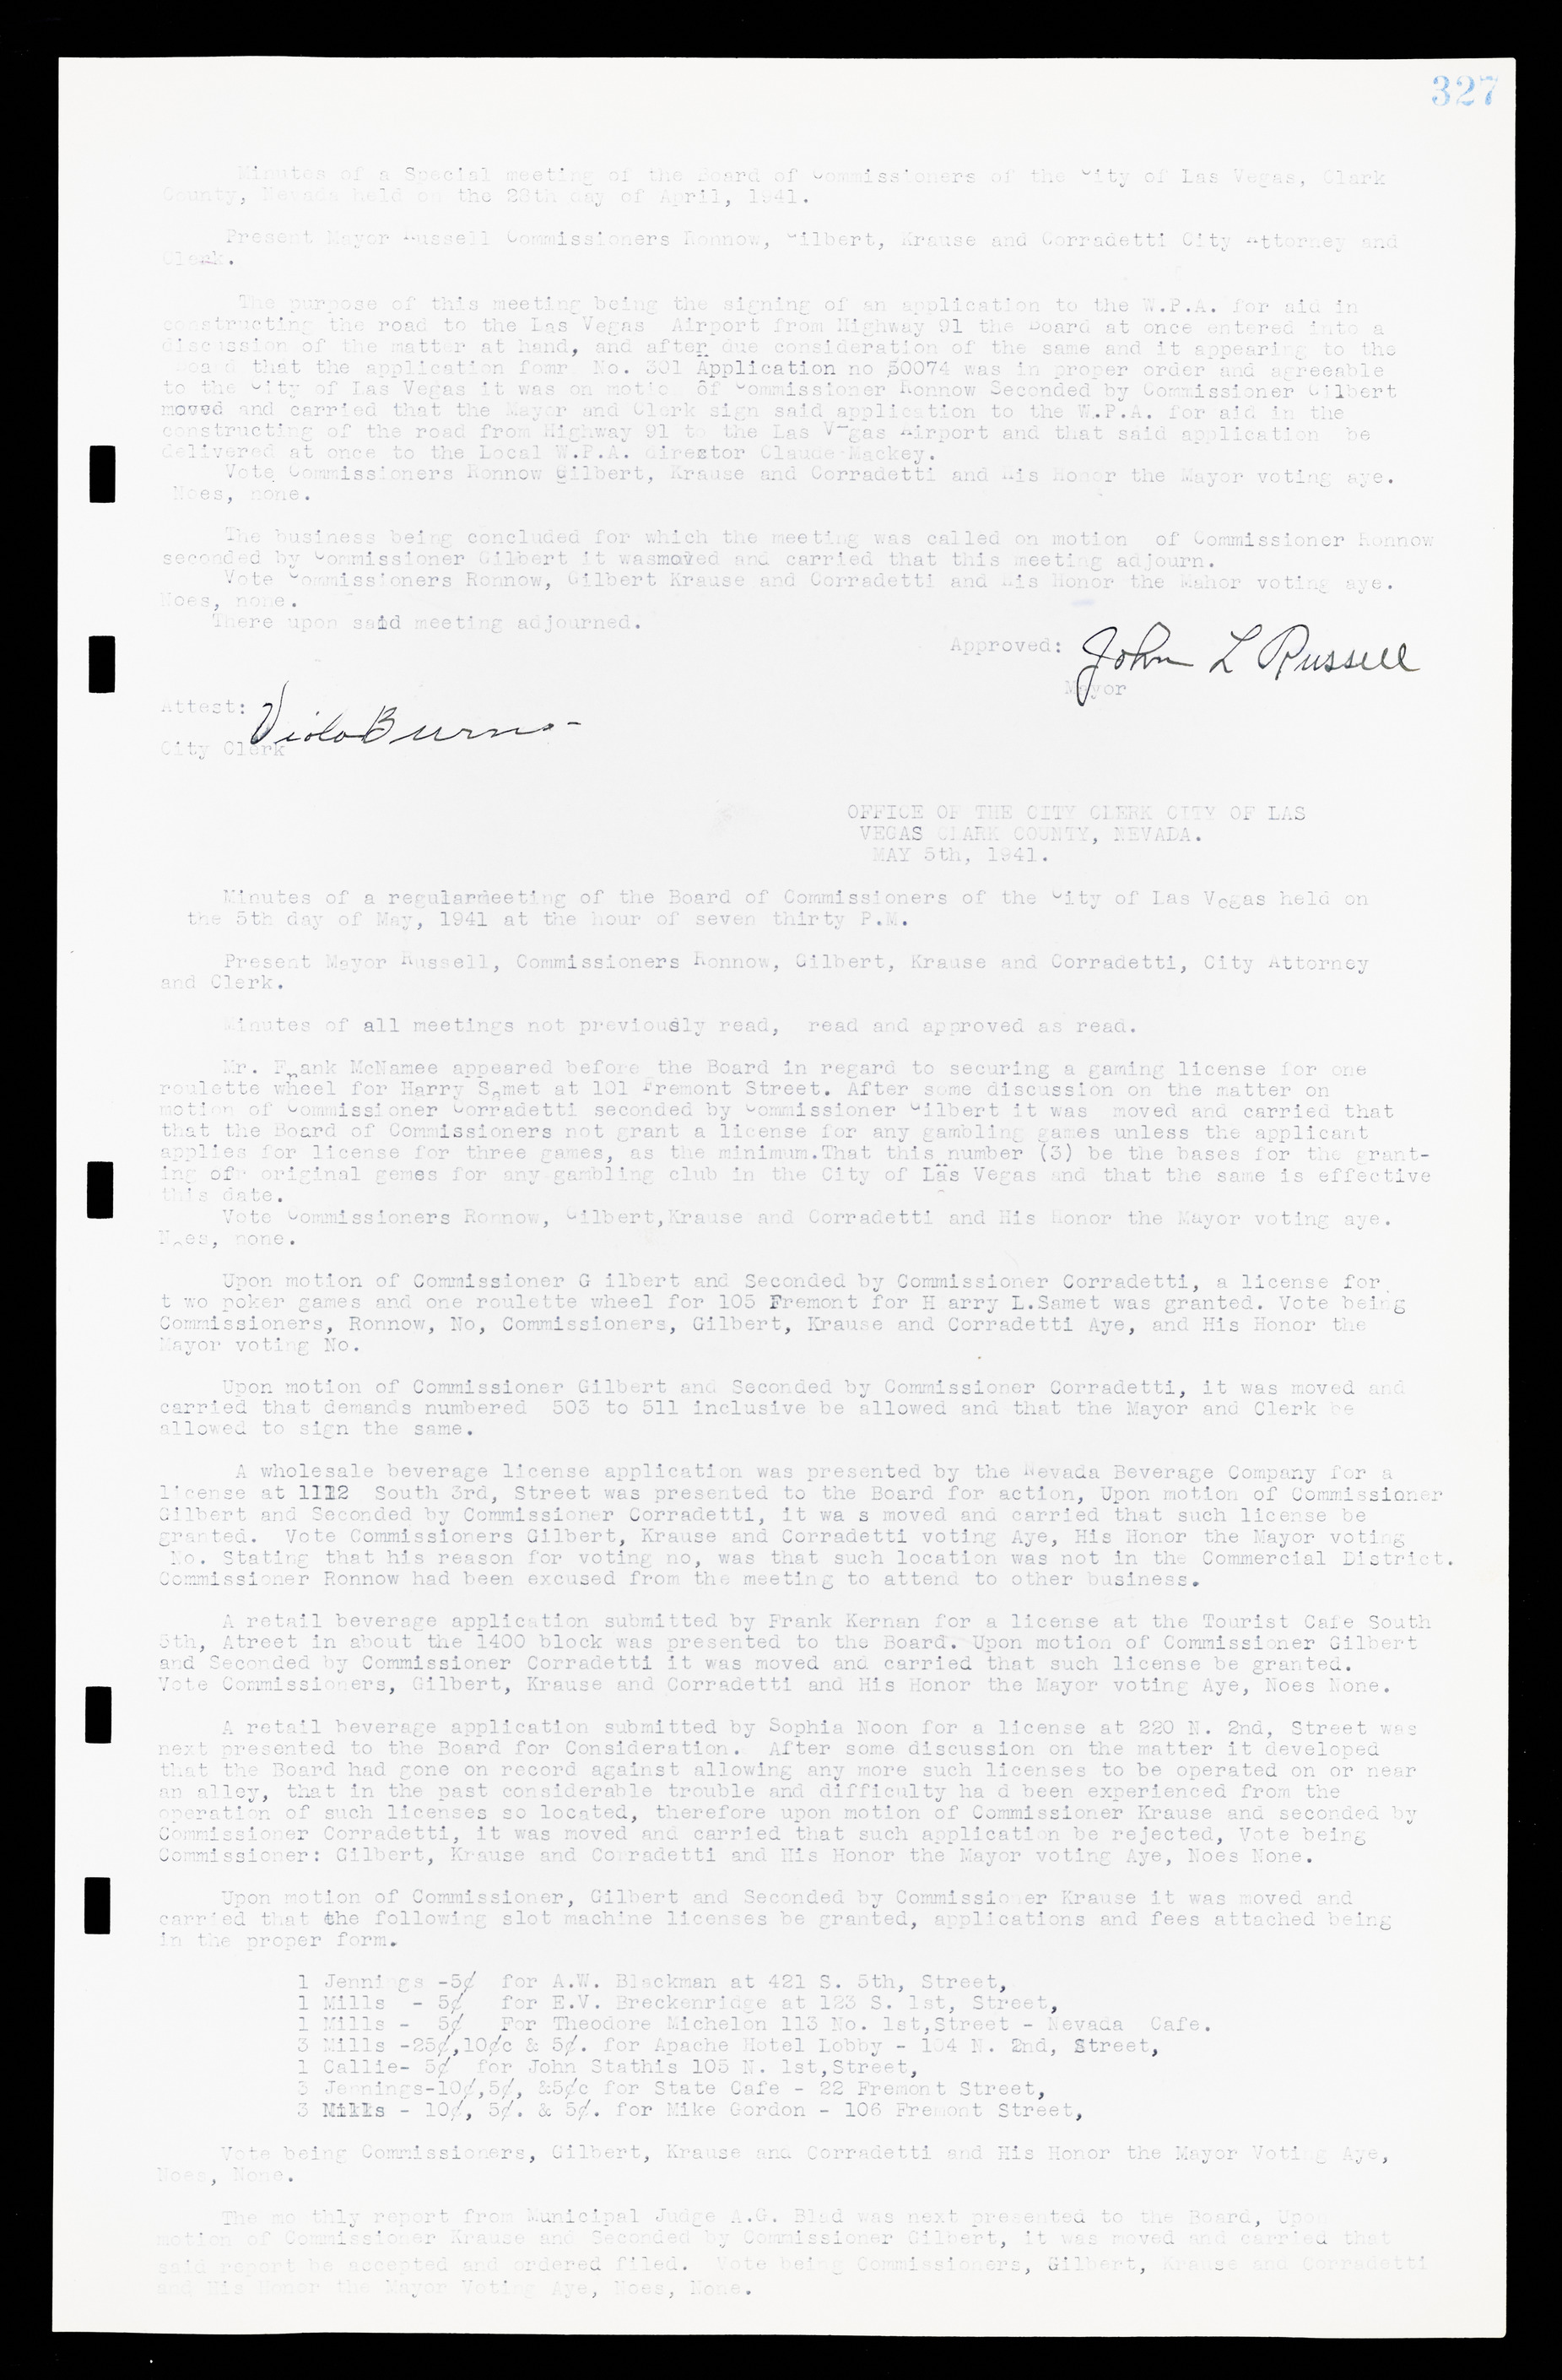 Las Vegas City Commission Minutes, February 17, 1937 to August 4, 1942, lvc000004-351